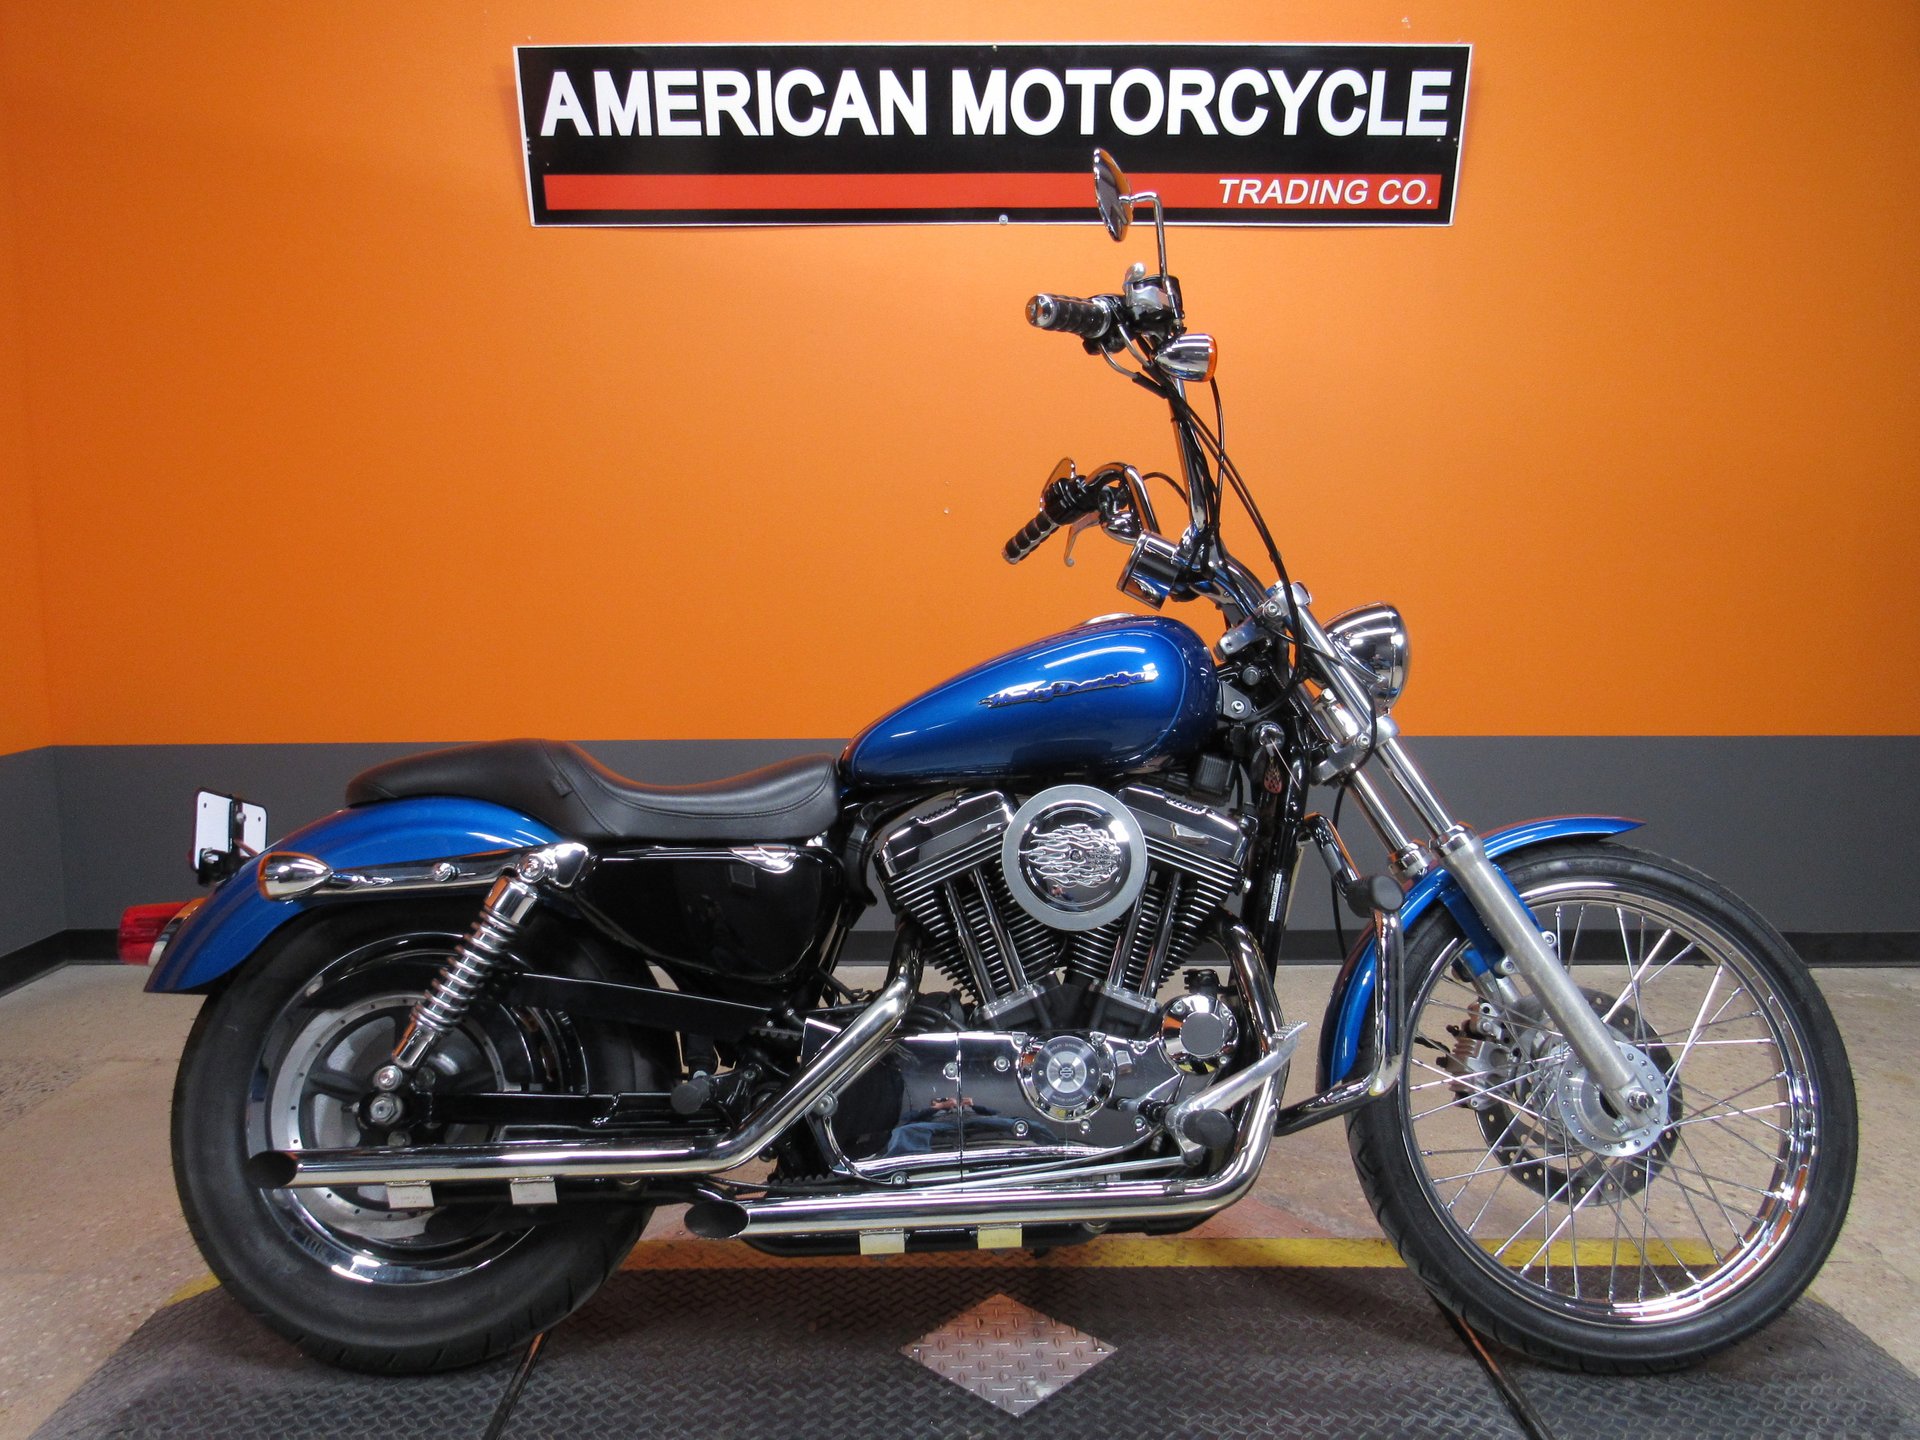 2006 Harley-Davidson Sportster 1200 | American Motorcycle ...